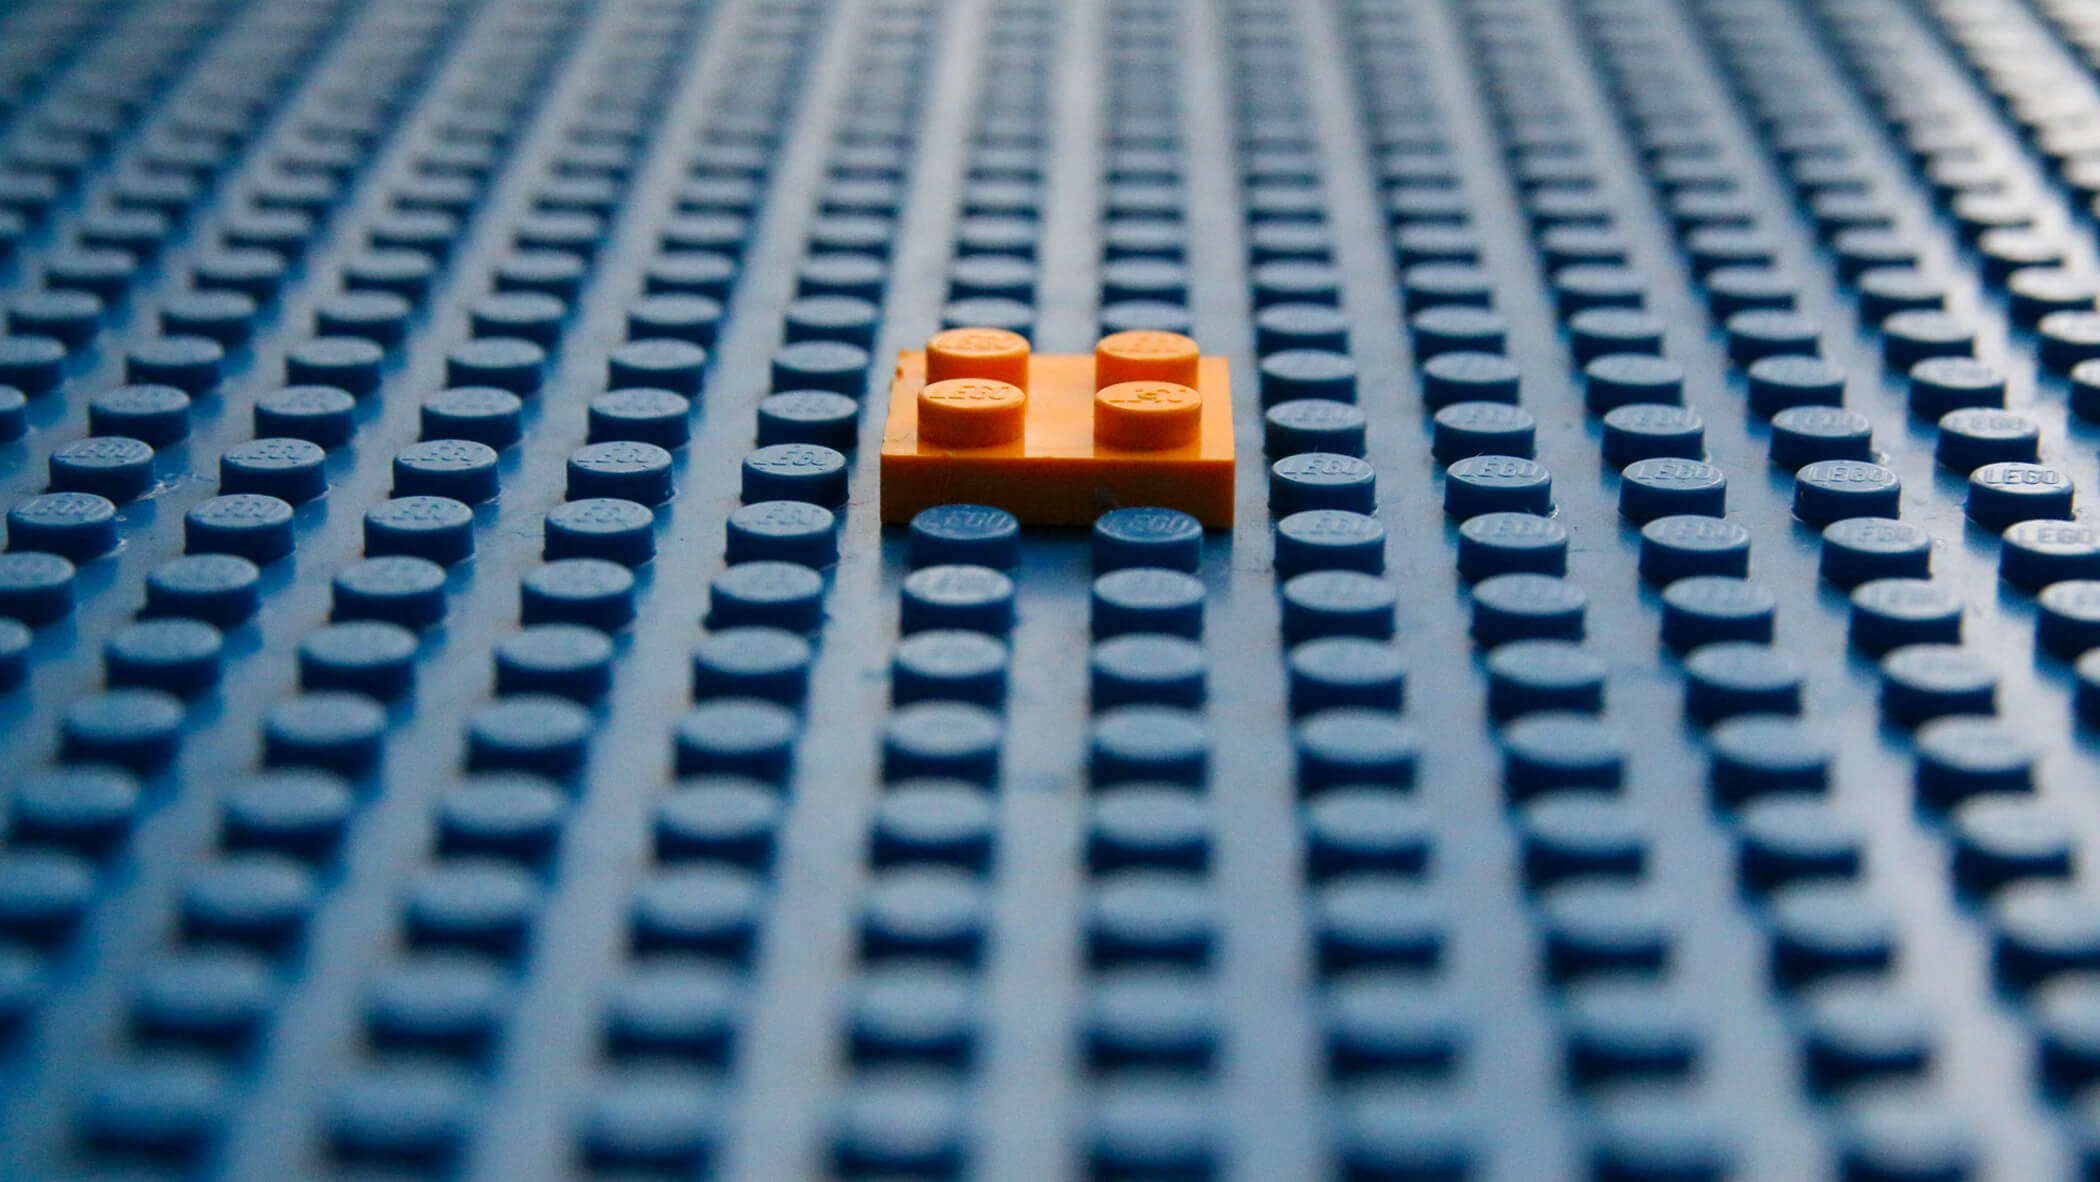 a small orange lego brick on a larger panel of blue lego brick